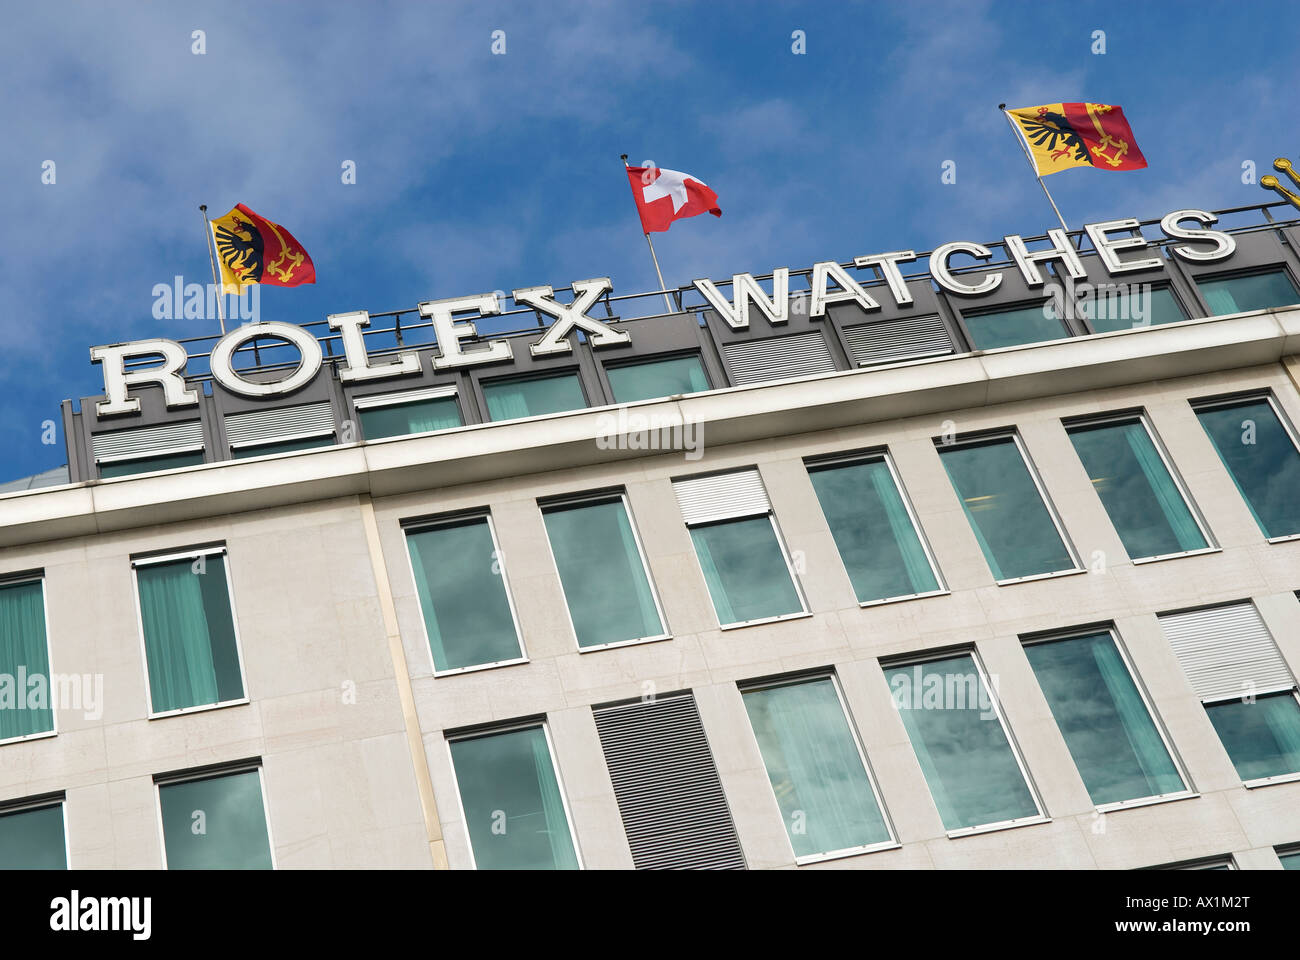 rolex watches building, geneva, switzerland Stock Photo